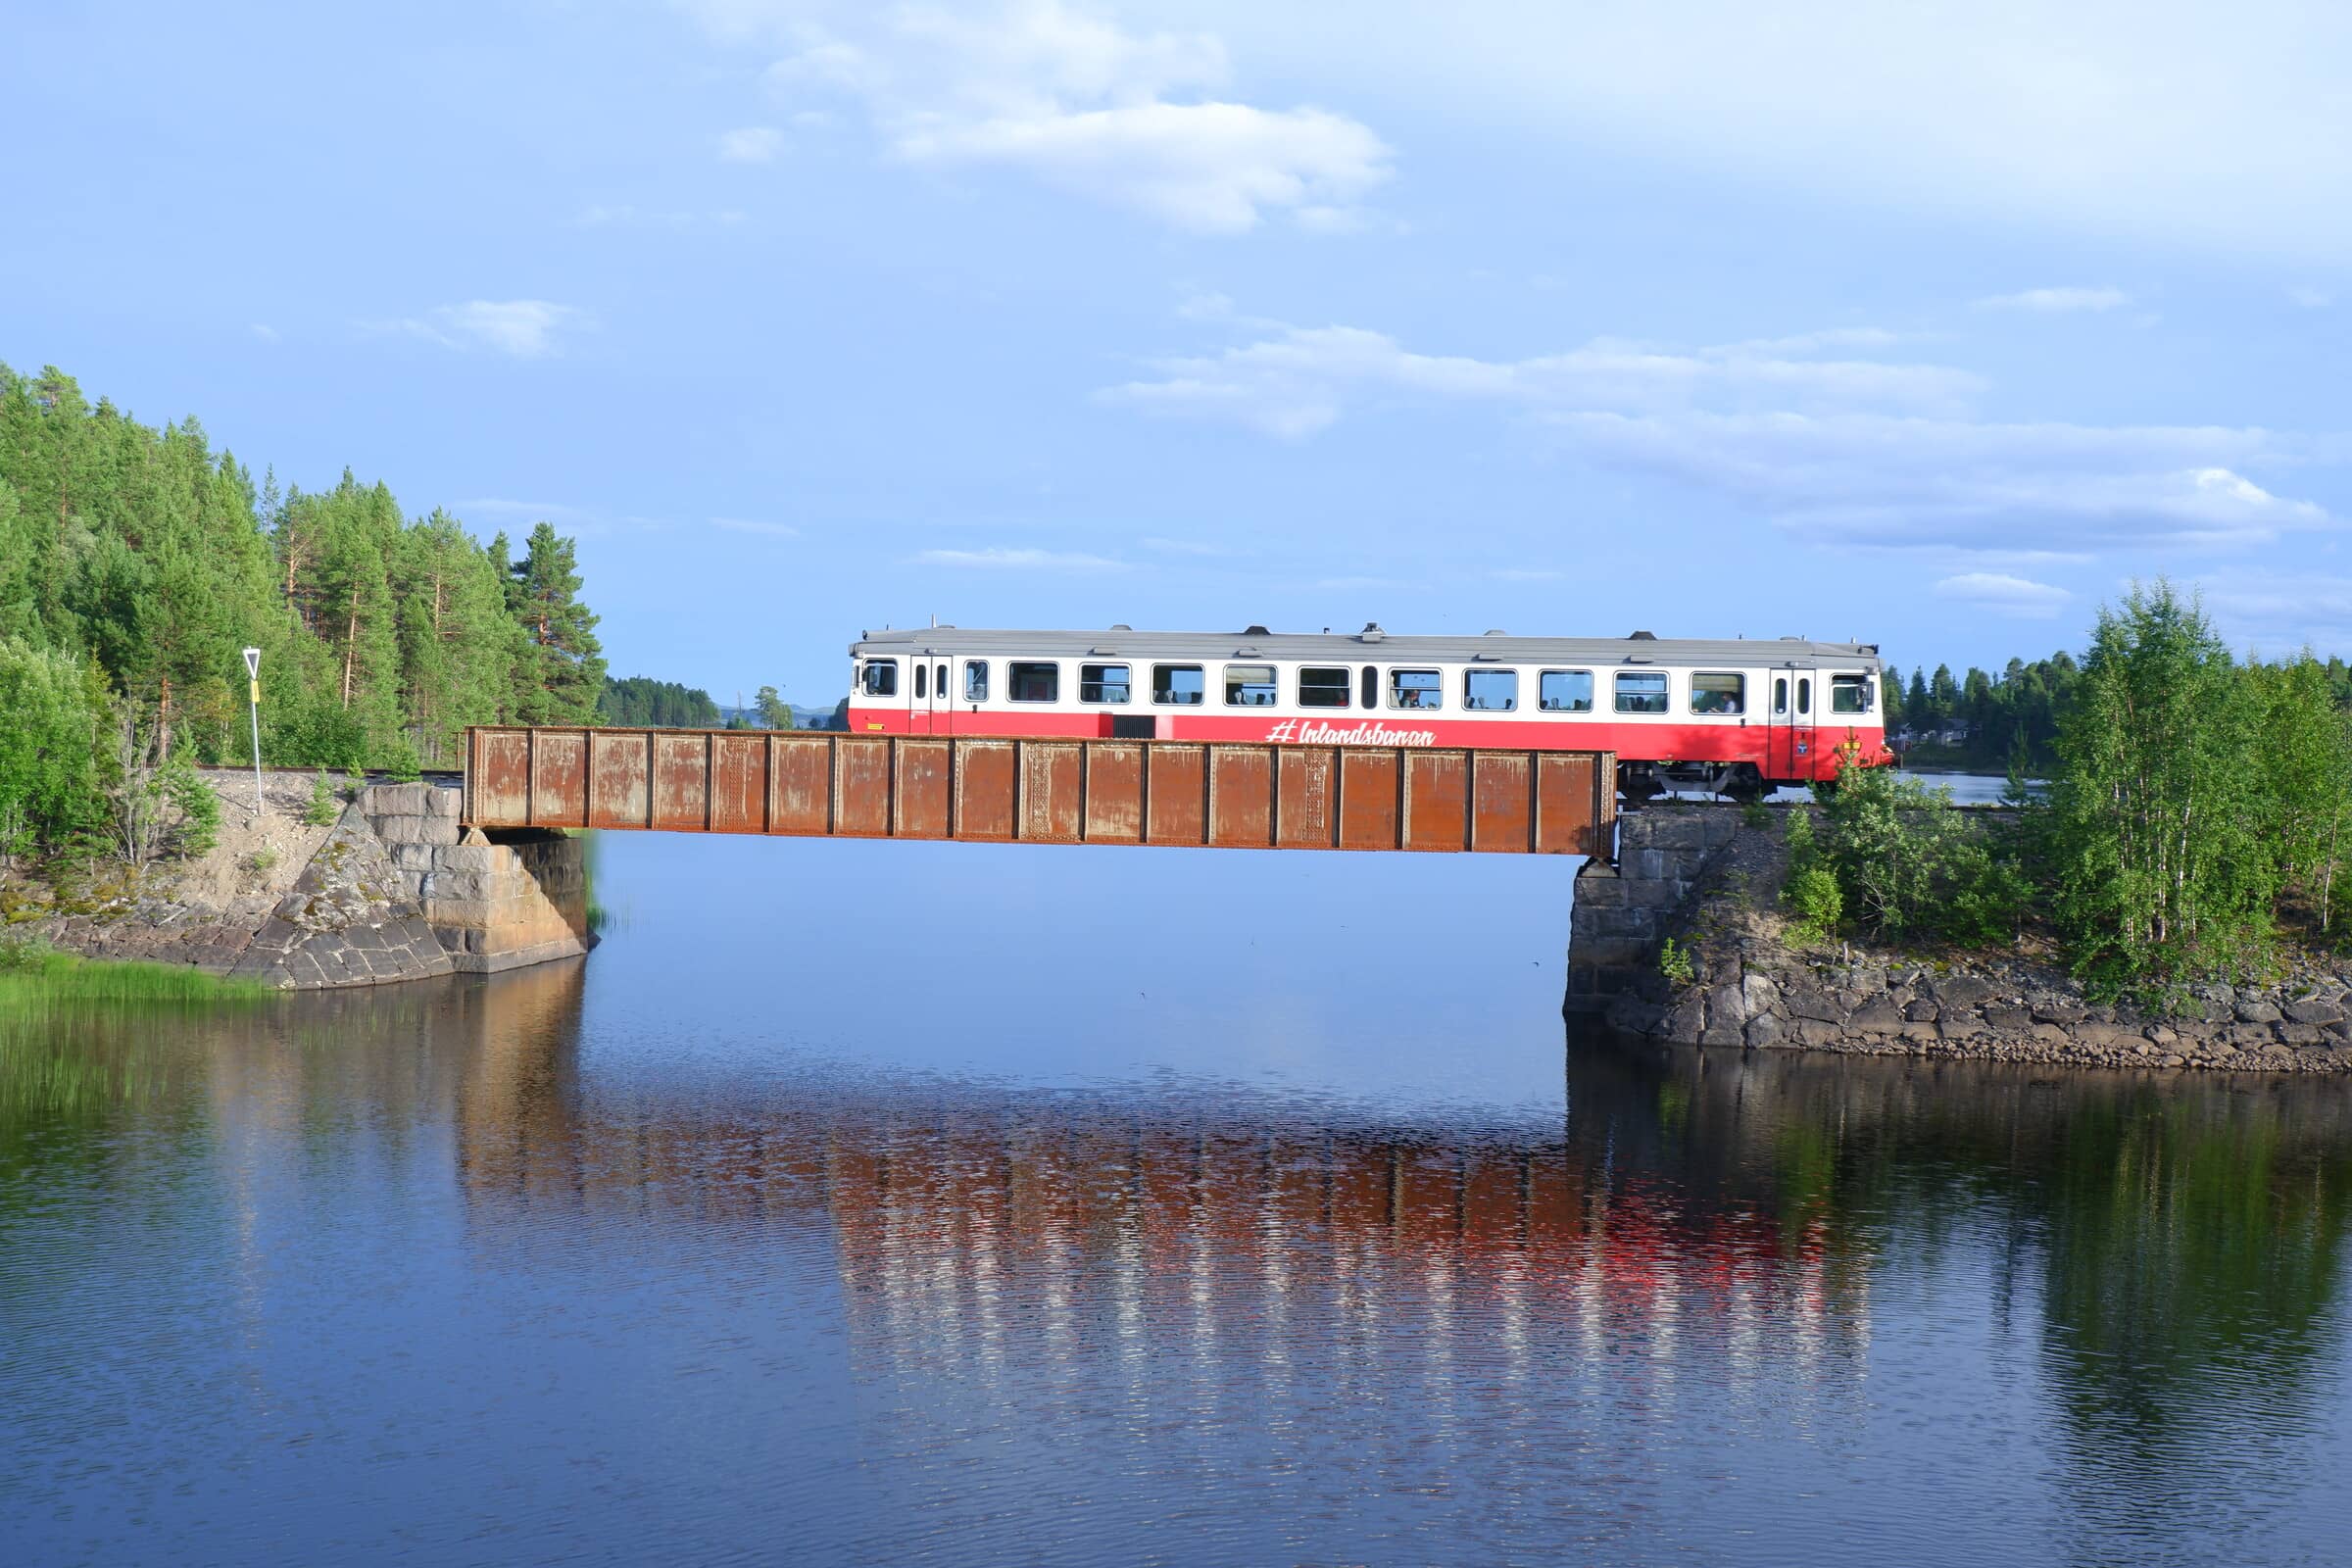 A two-wagon passenger train going over a bridge.